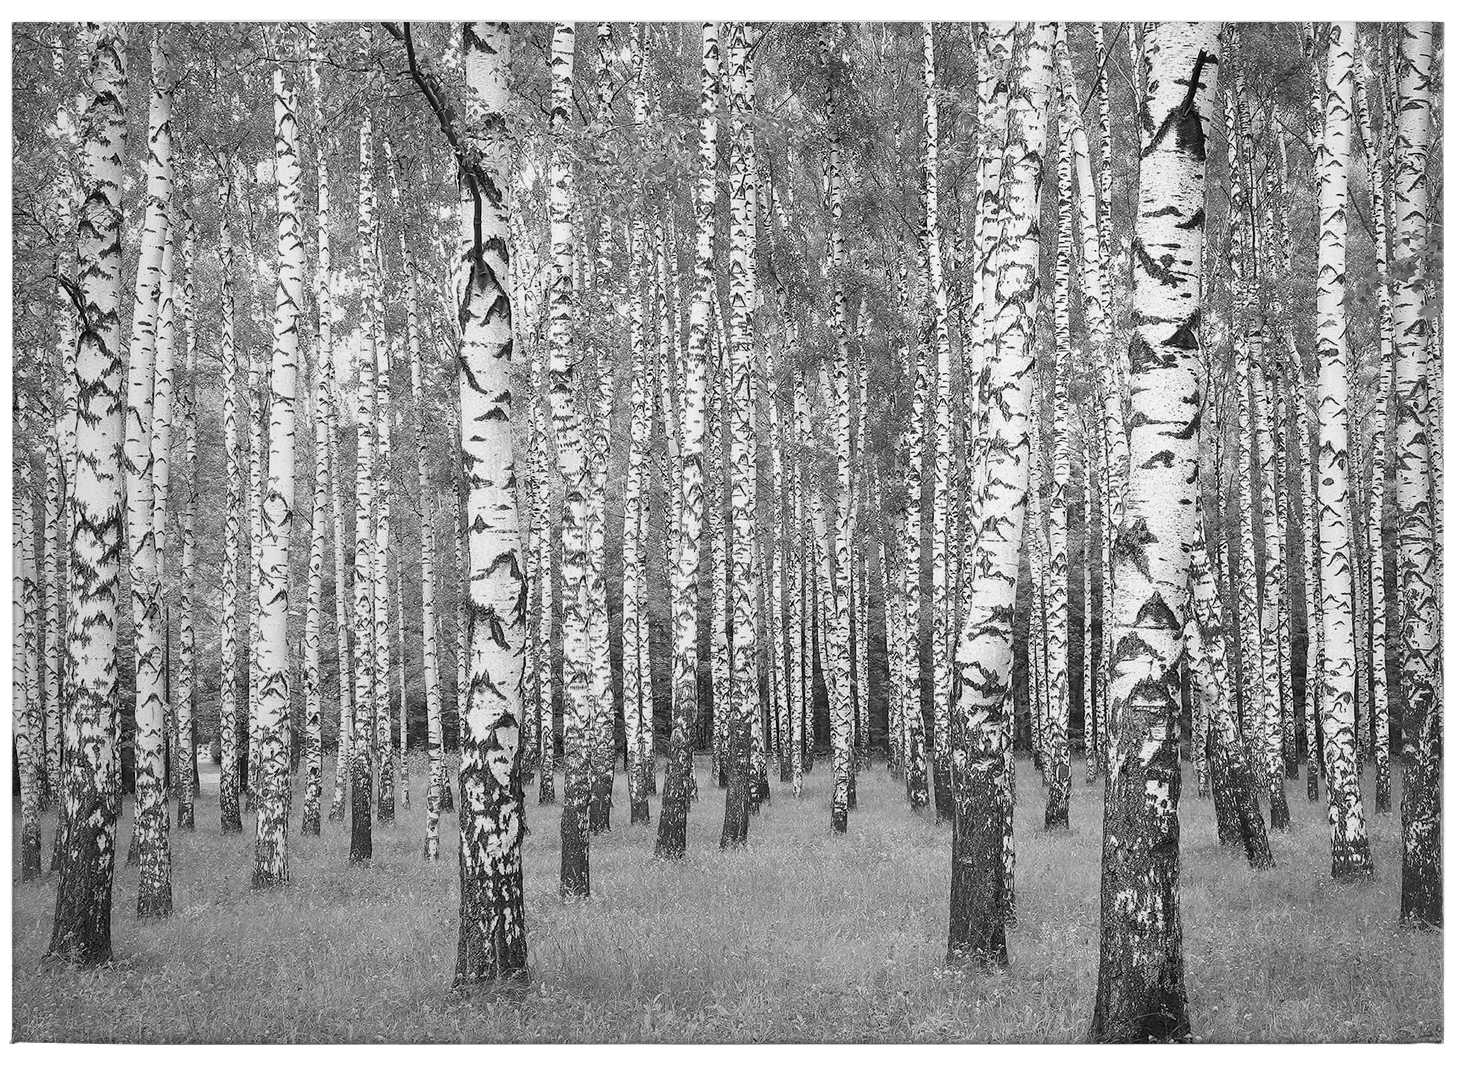             Lienzo Bosque de abedules en blanco y negro - 0,70 m x 0,50 m
        